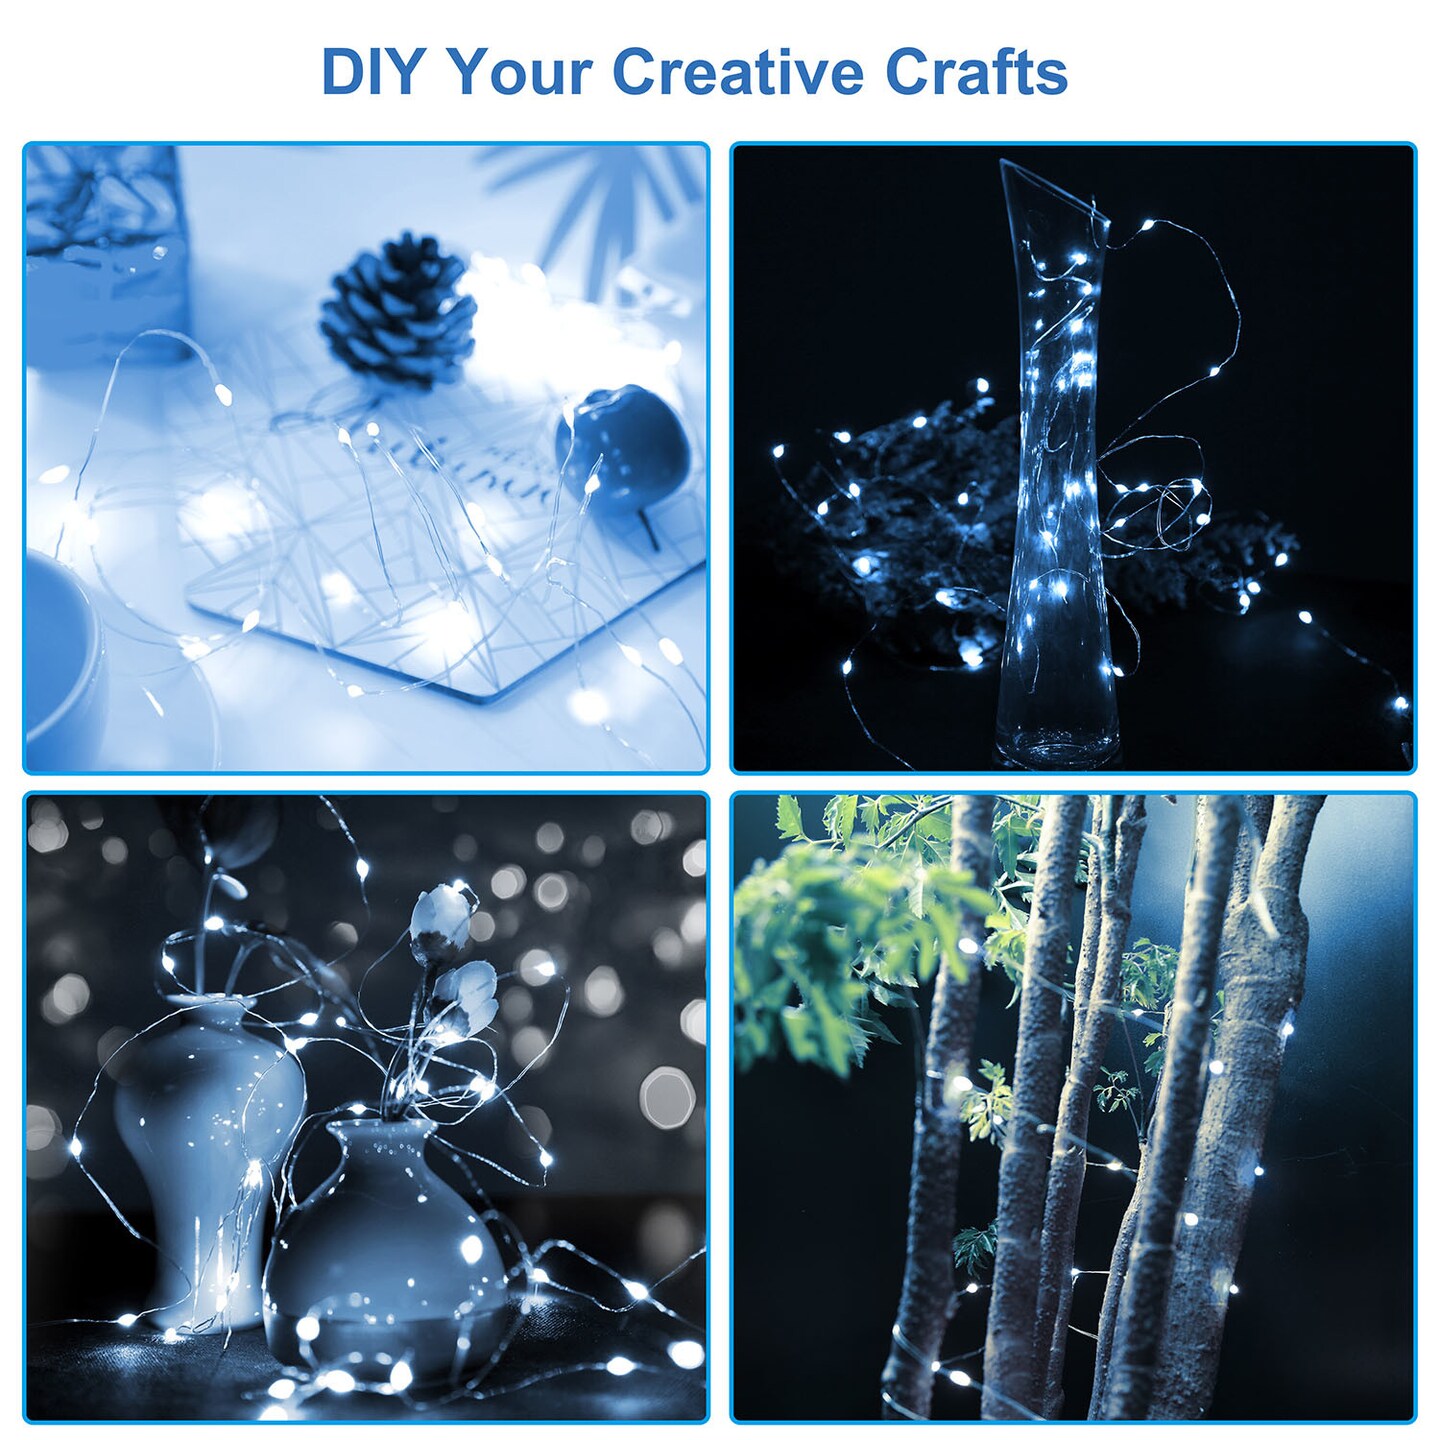 6 Pack DIY LED String Lights 6.56ft 20 LEDs Decor - Starry Fairy Lights